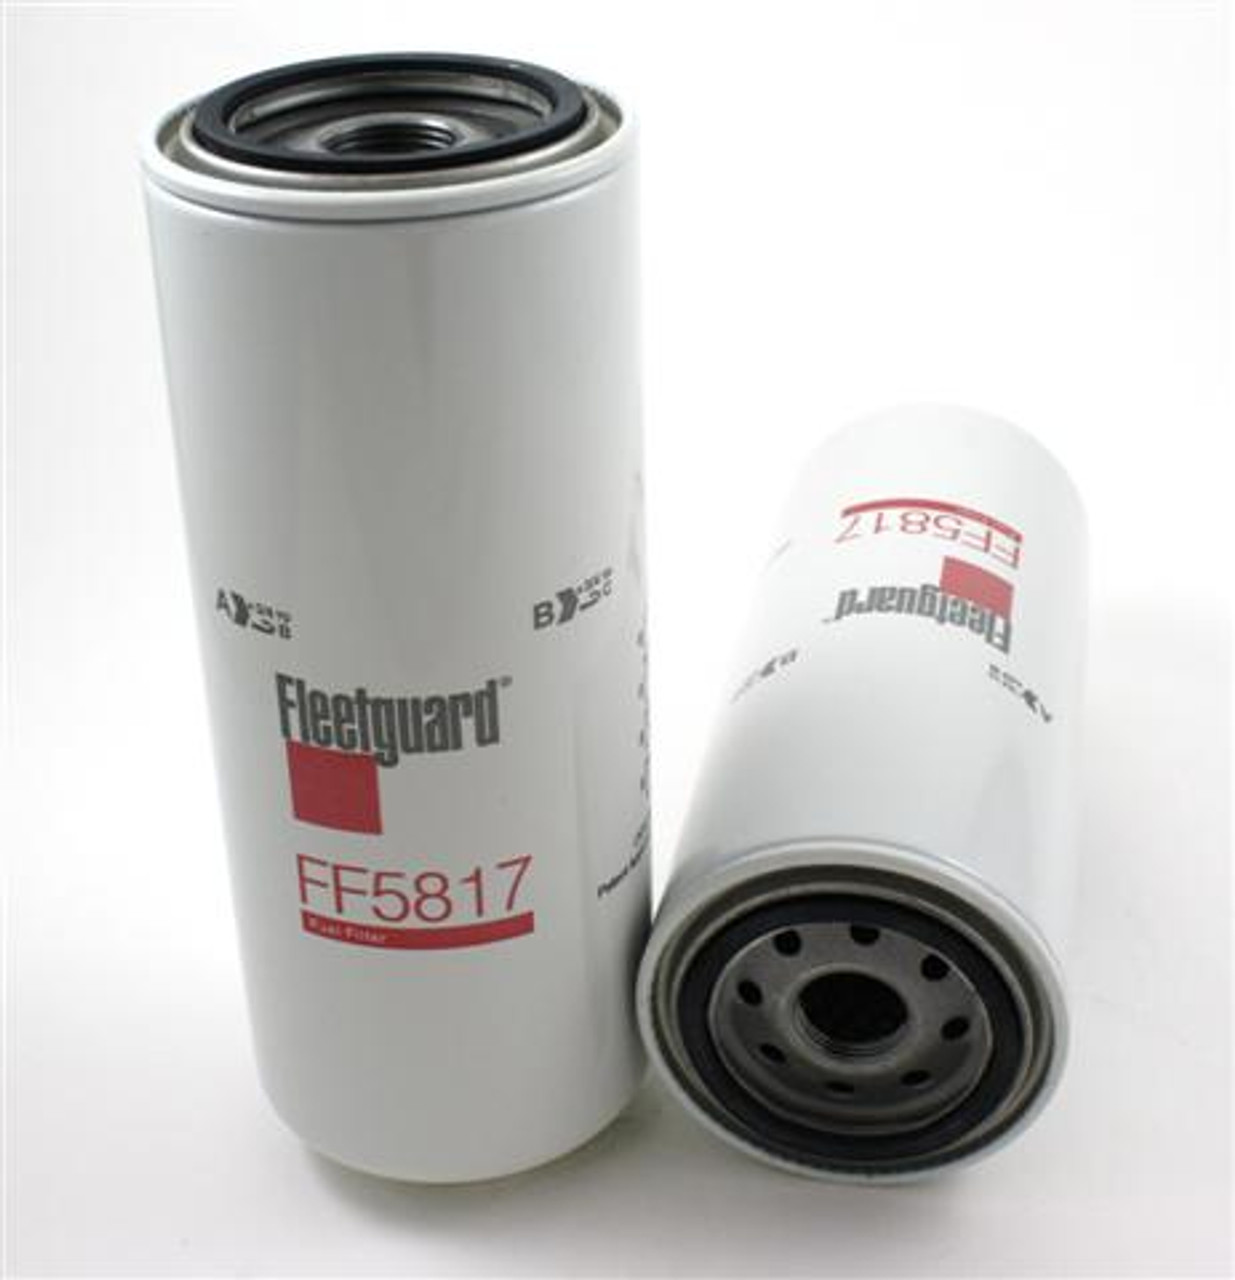 FF5817: Fleetguard Fuel Filter